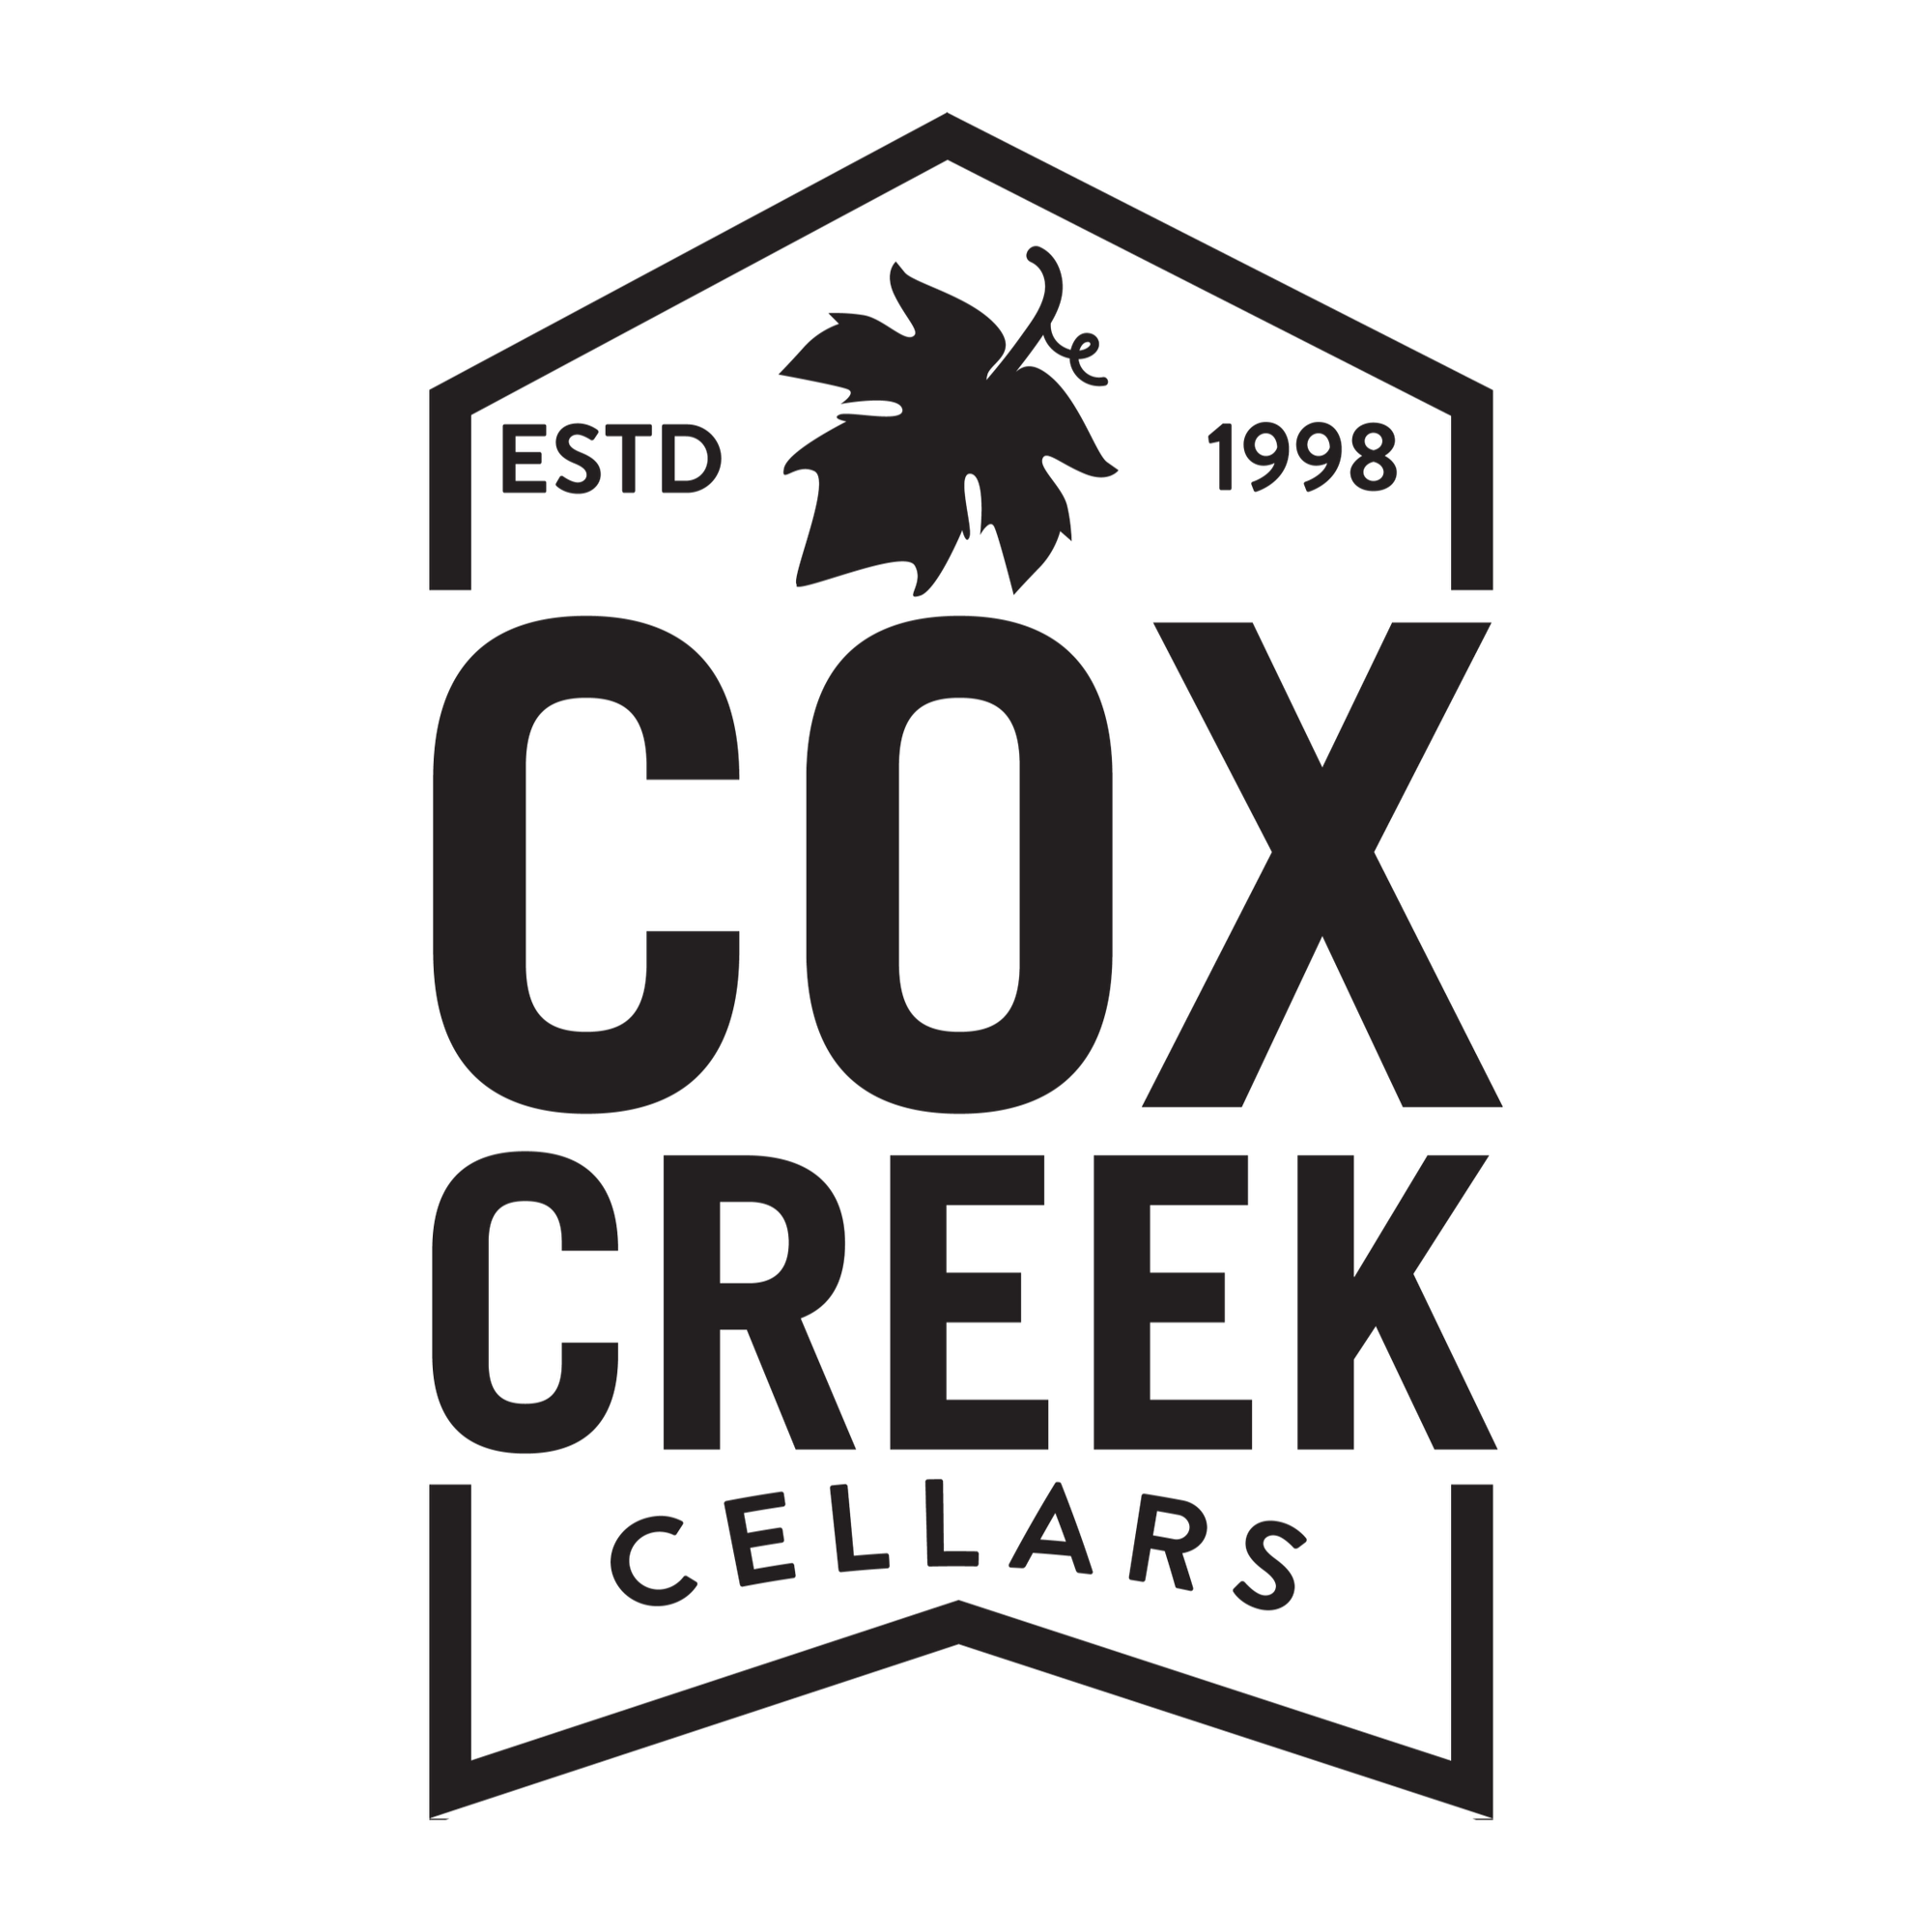 Cox Creek Cellars Gift Card